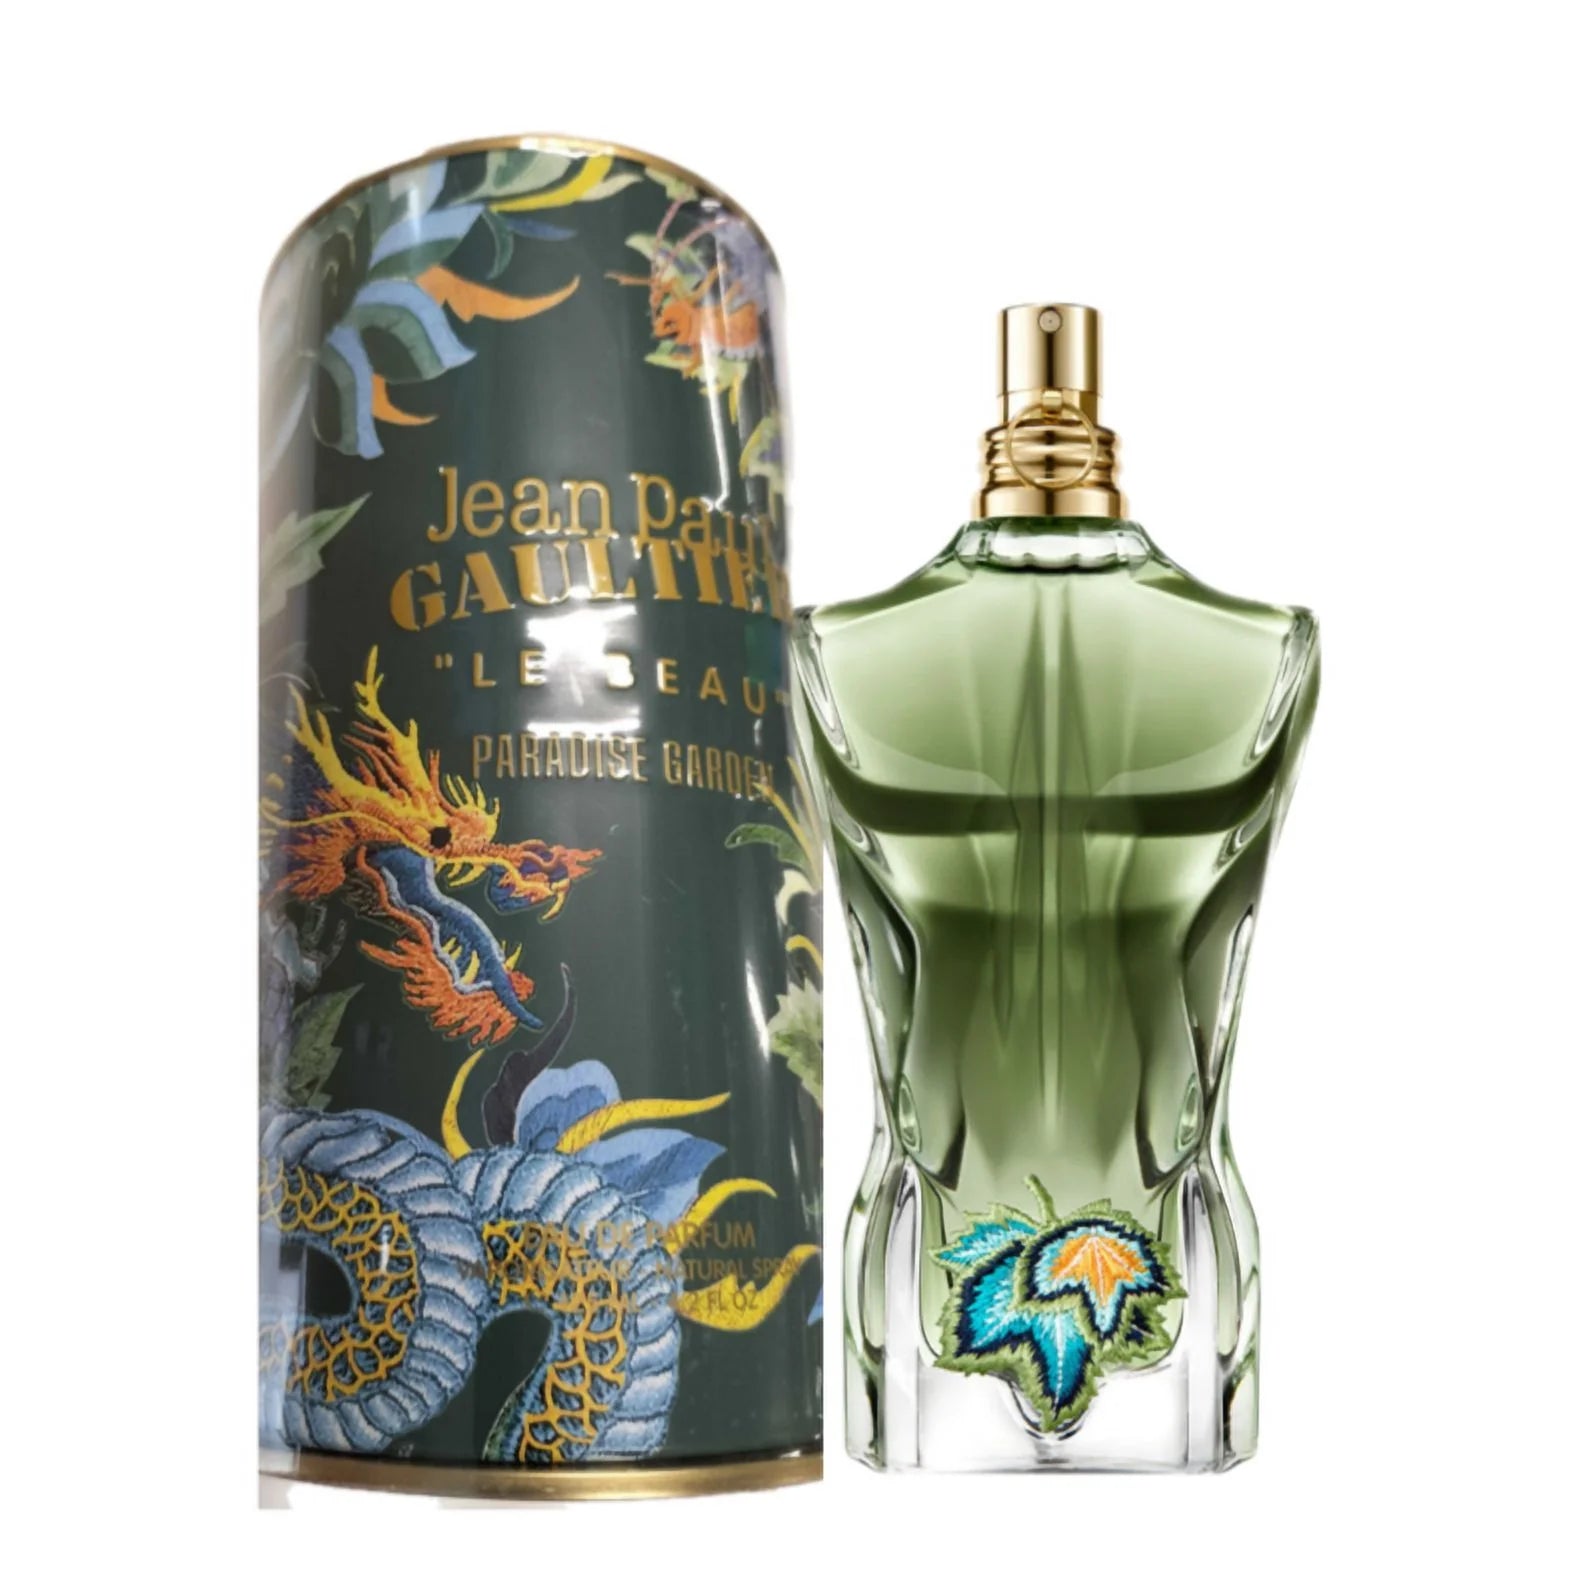 Jean Paul Gaultier Paradise Garden perfume for men